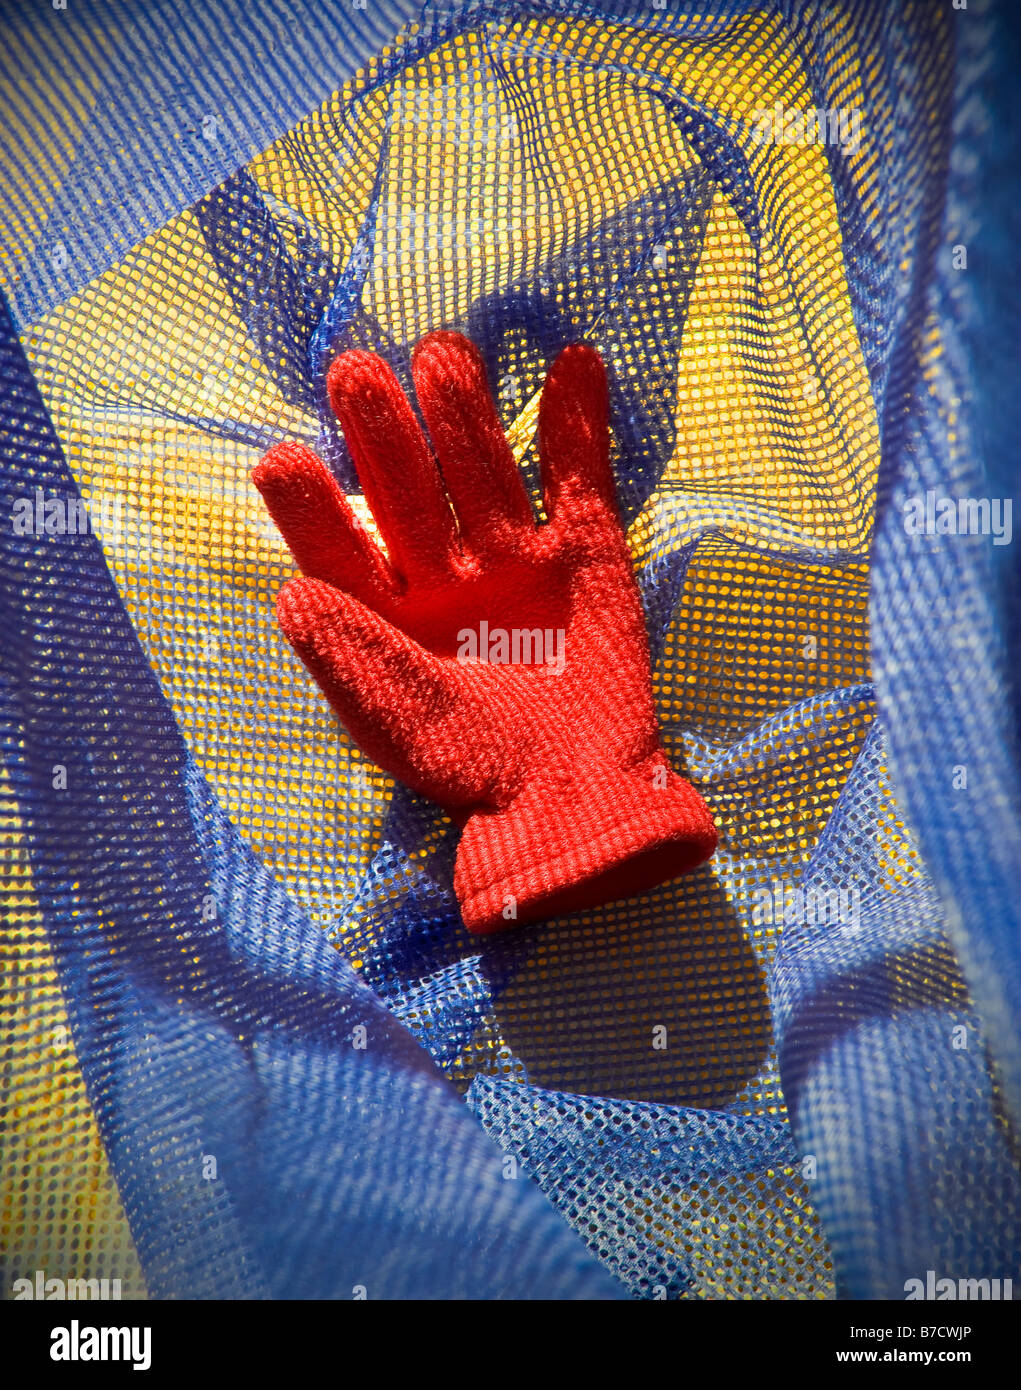 Red Glove Inside Mesh Laundry Bag Stock Photo